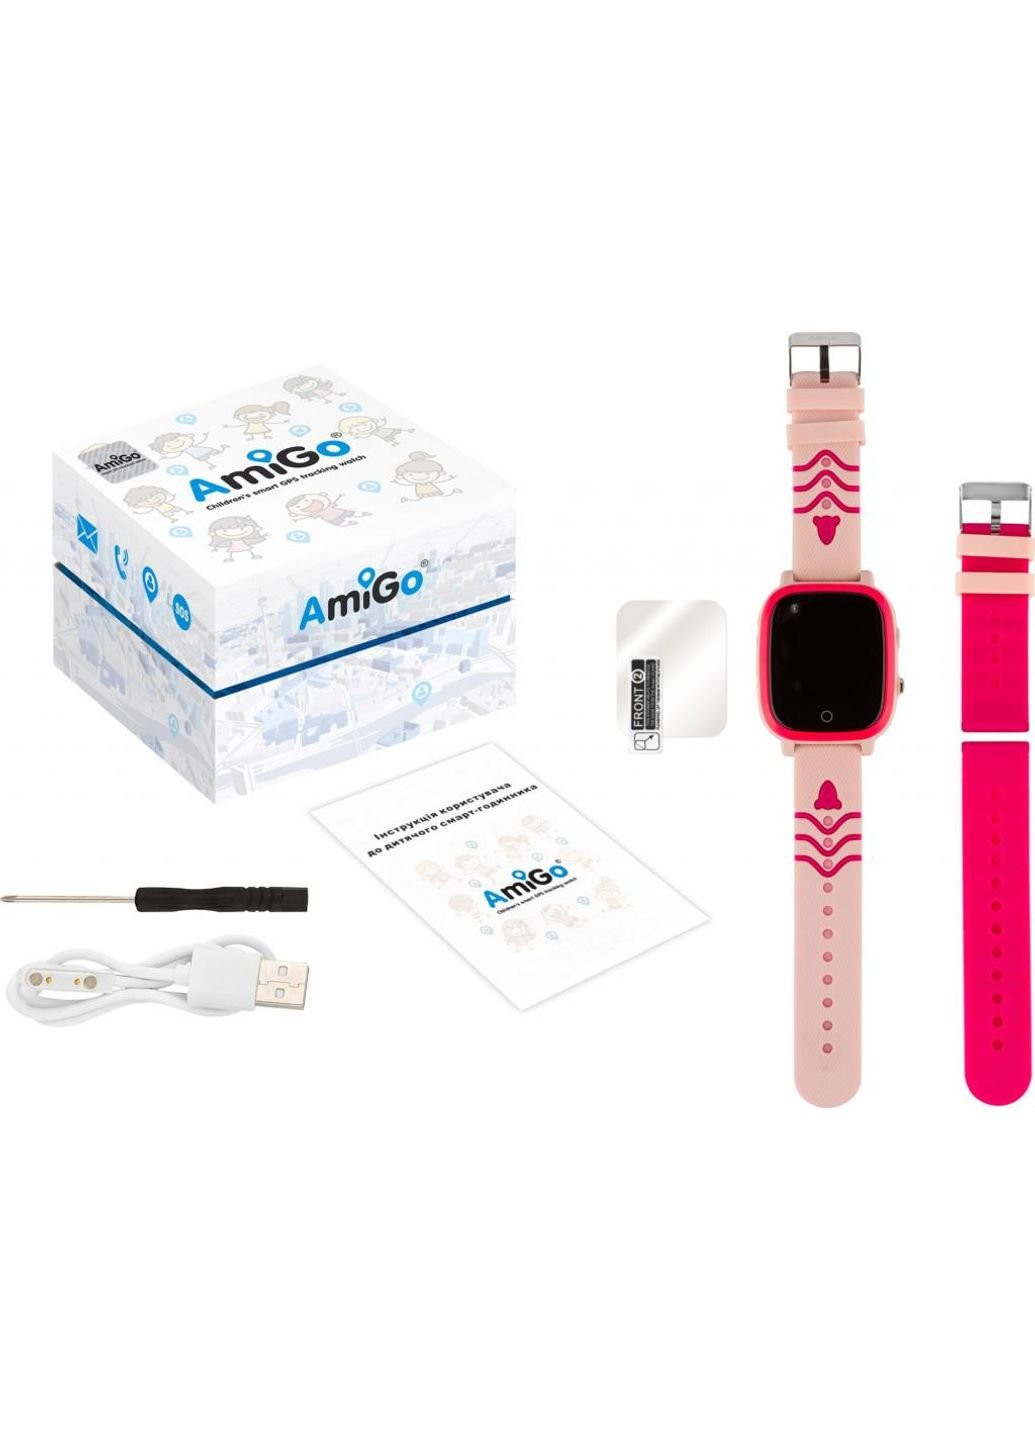 Смарт-часи GO005 4G WIFI Kids waterproof Thermometer Pink (747018) Amigo (250095836)